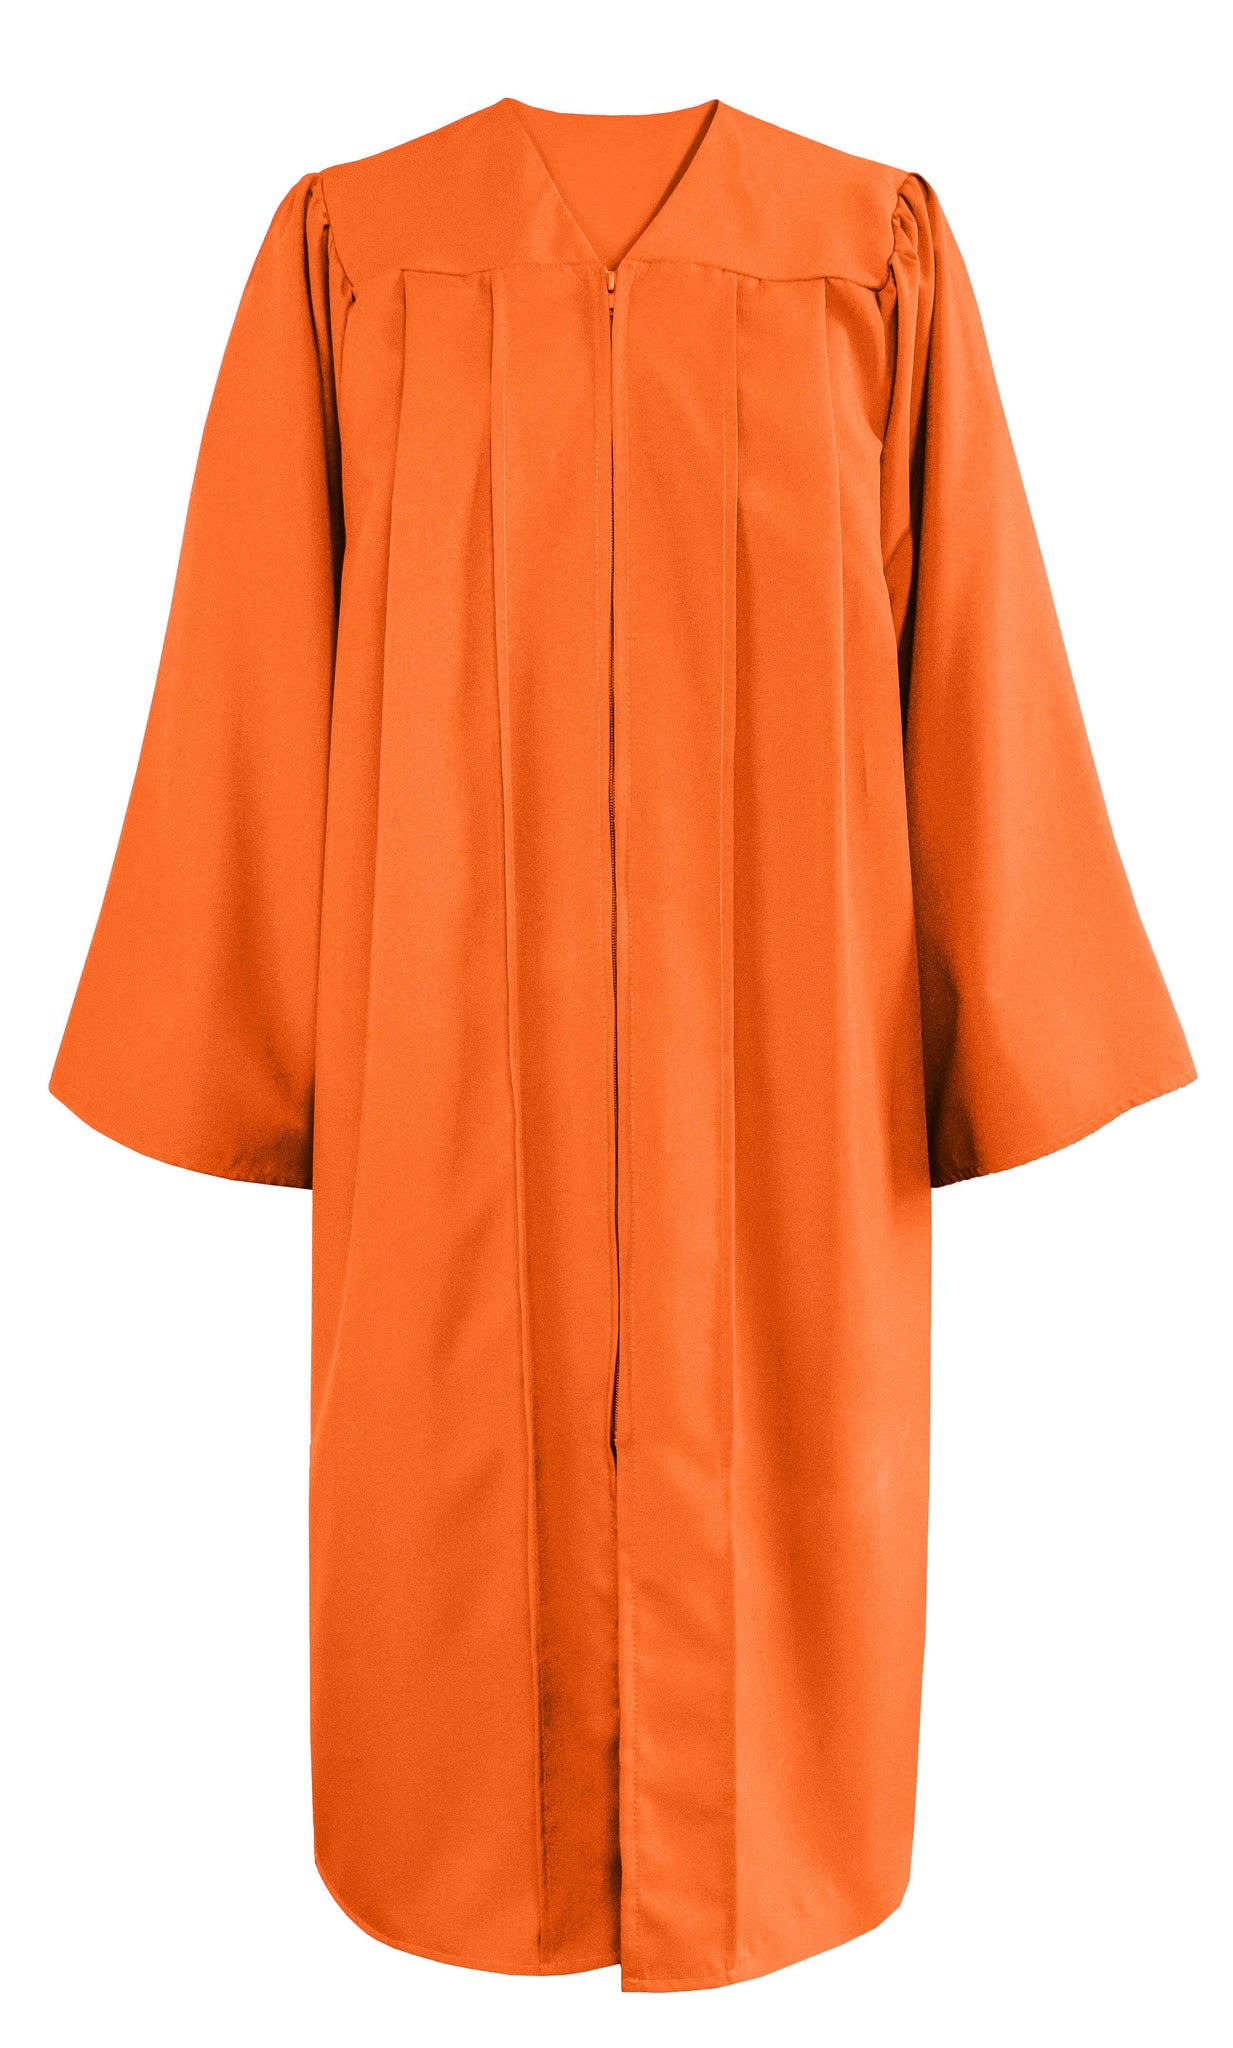 Unisex  Matte Graduation Gown|Choir Robe for Church|Cosplay Costume （Orange）